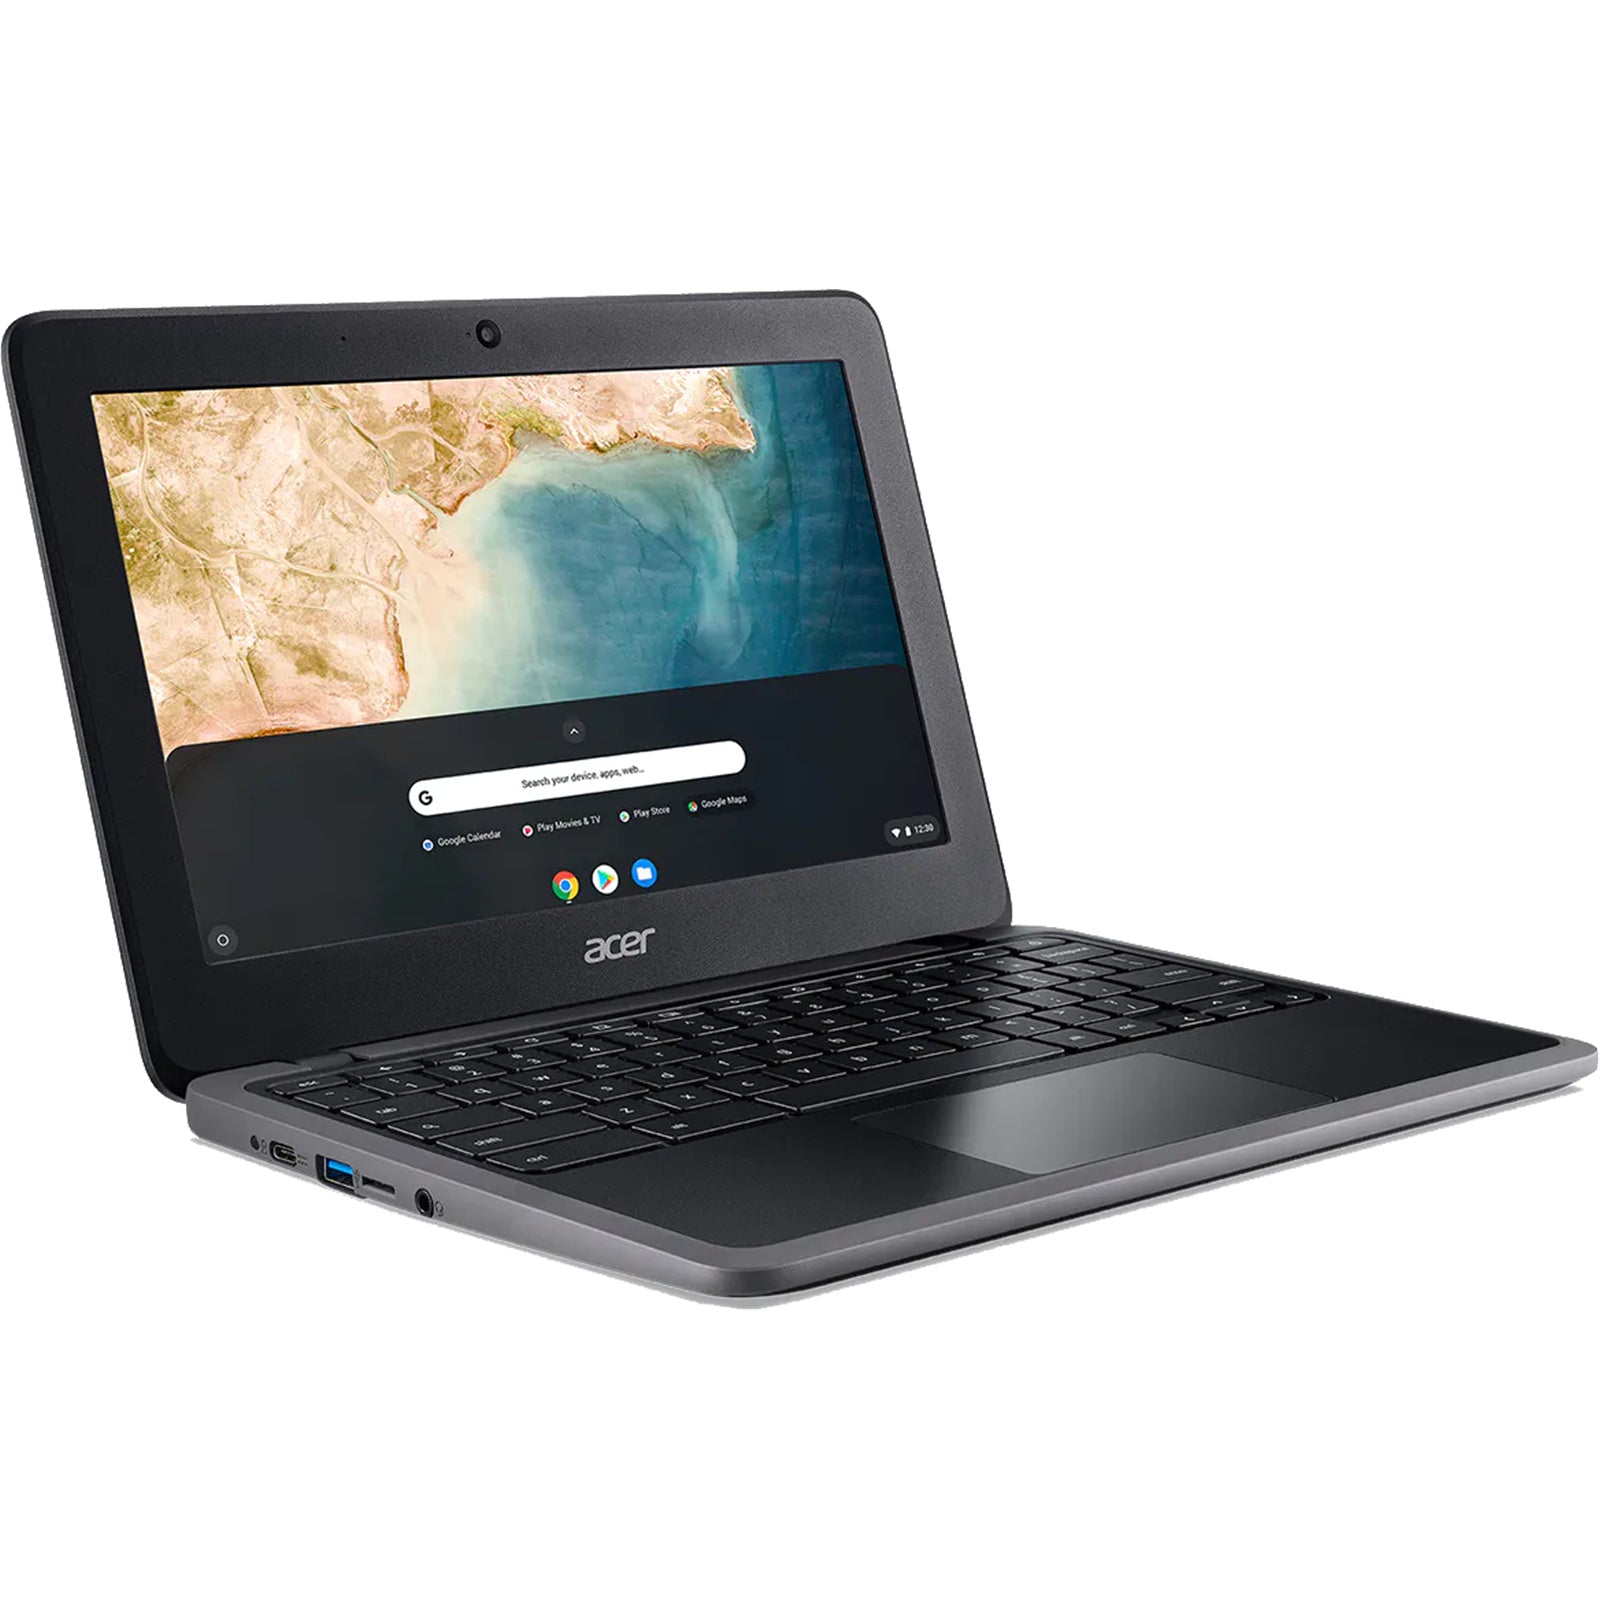 Acer Chromebook C733, Celeron N4020, 4GB RAM, 32GB eMMC, ChromeOS - Refurbished Good Condition